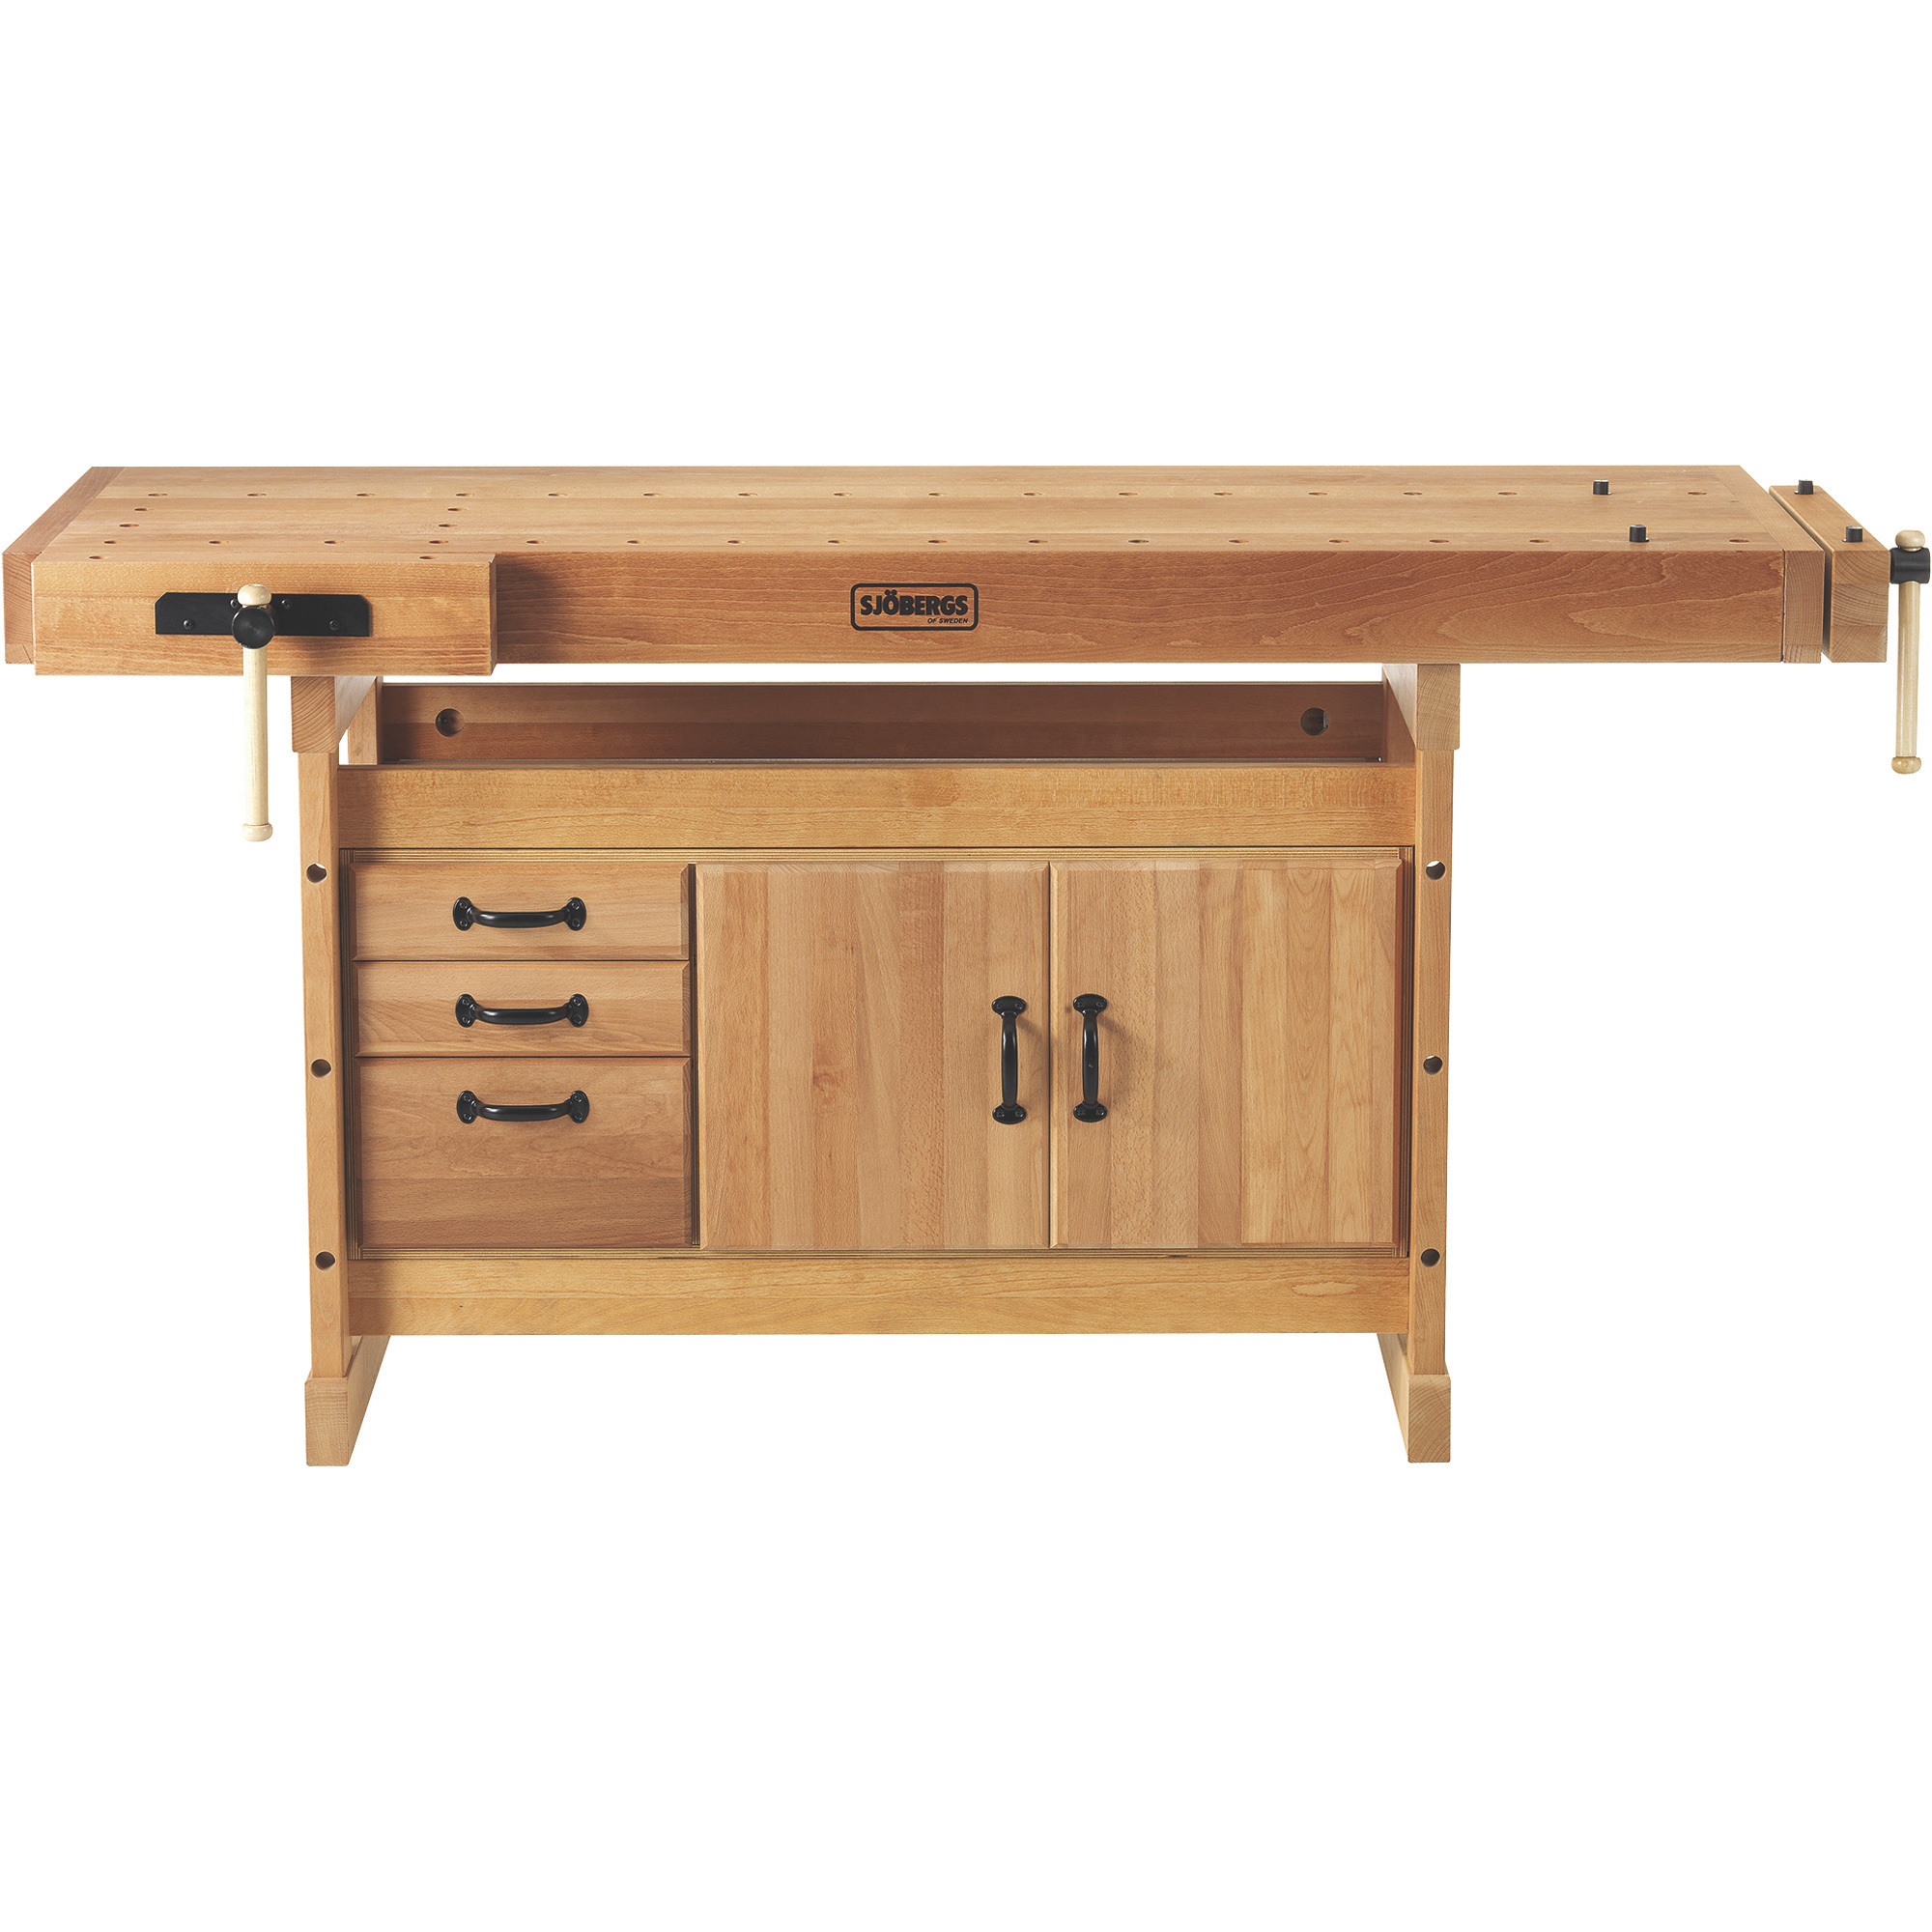 Cabinet Sjobergs 7/8inW Wood Workbench Scandi 1425 814000013232 | Plus eBay 57 and